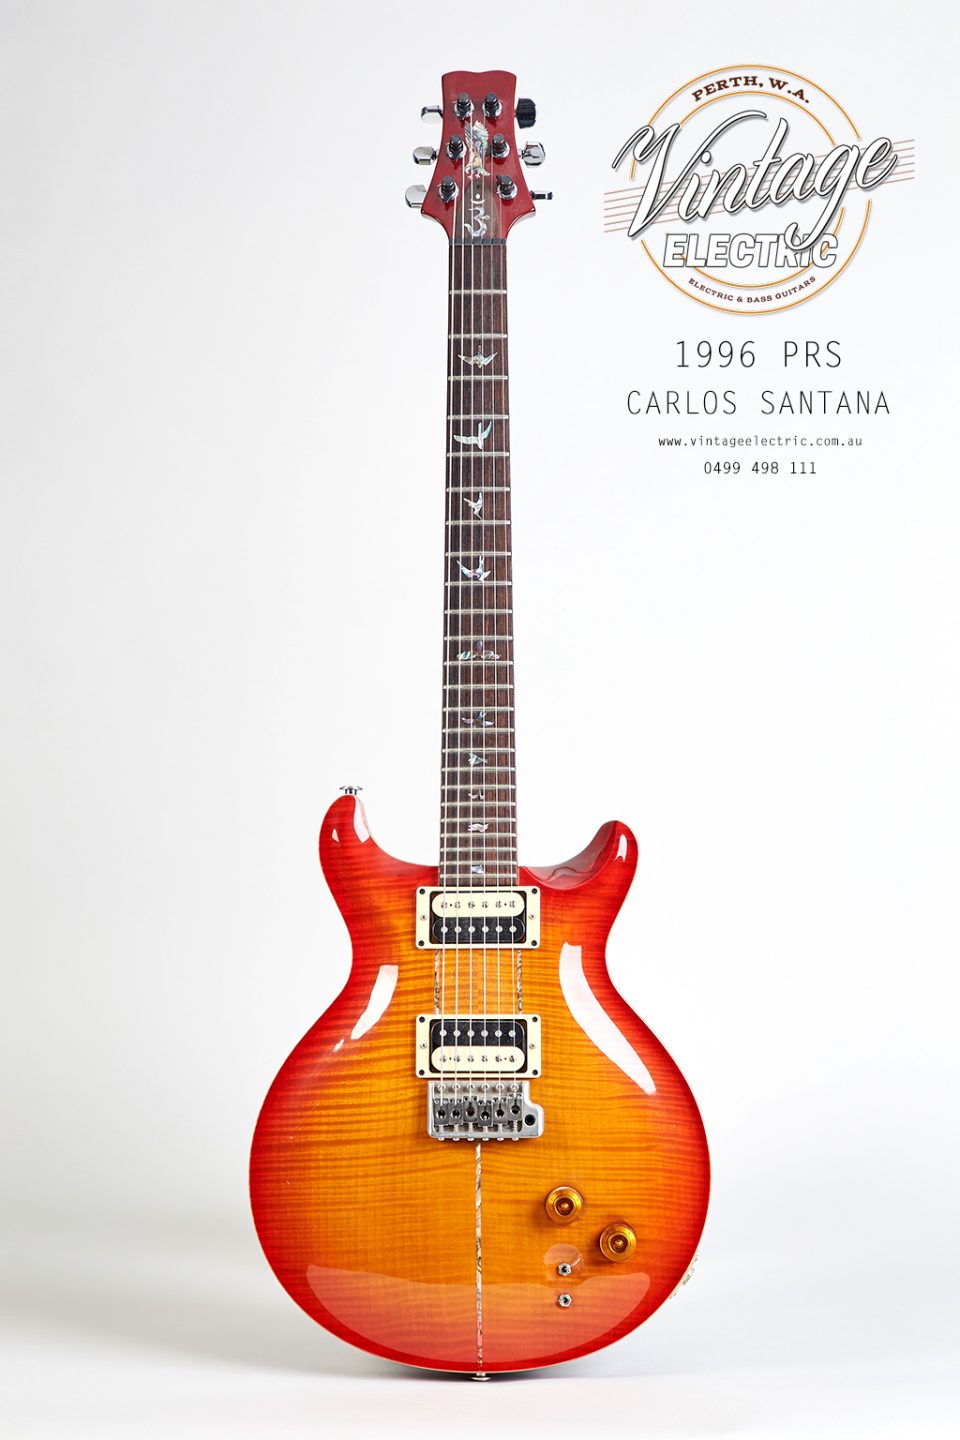 1996 Paul Reed Smith Santana Guitar | Vintage Electric